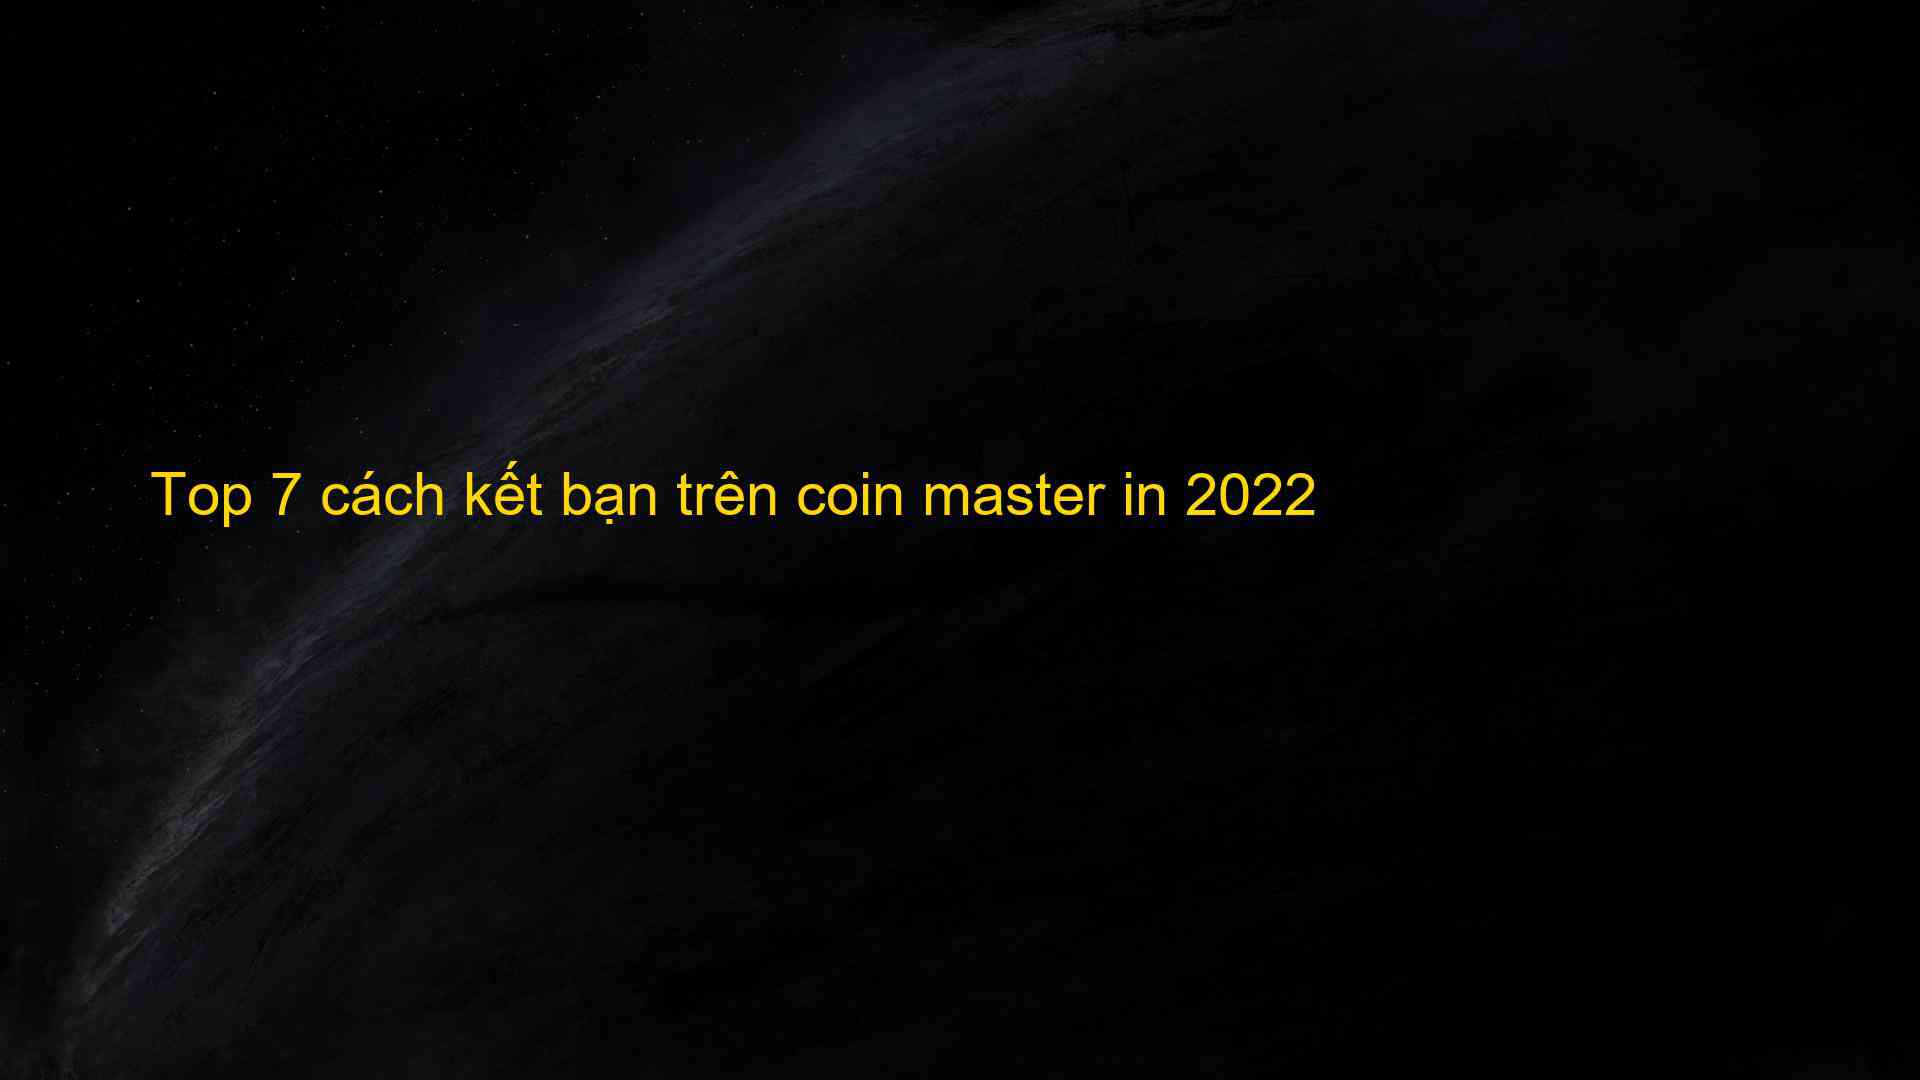 Top 7 cach ket ban tren coin master in 2022 1659944259